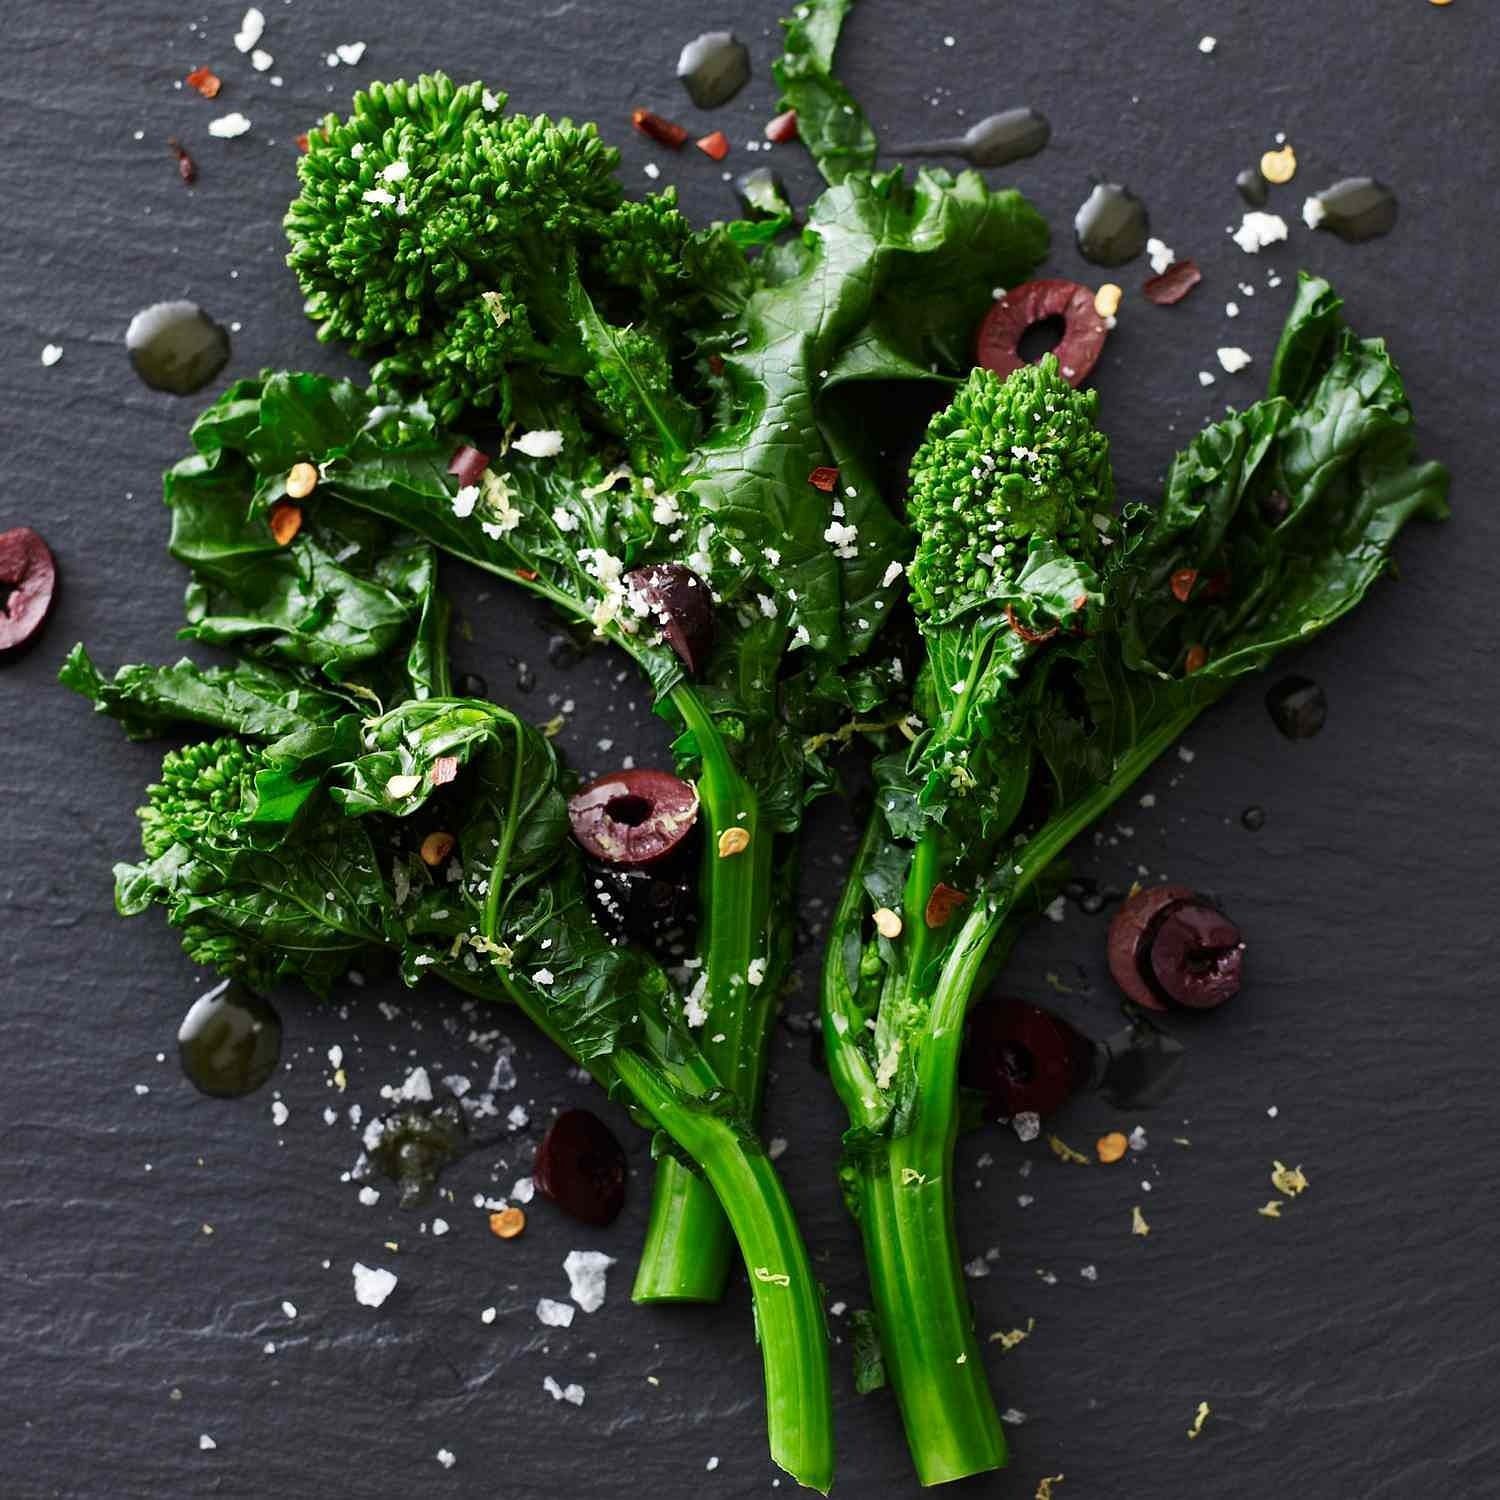 Broccoli rabe (Image via Food and wine)